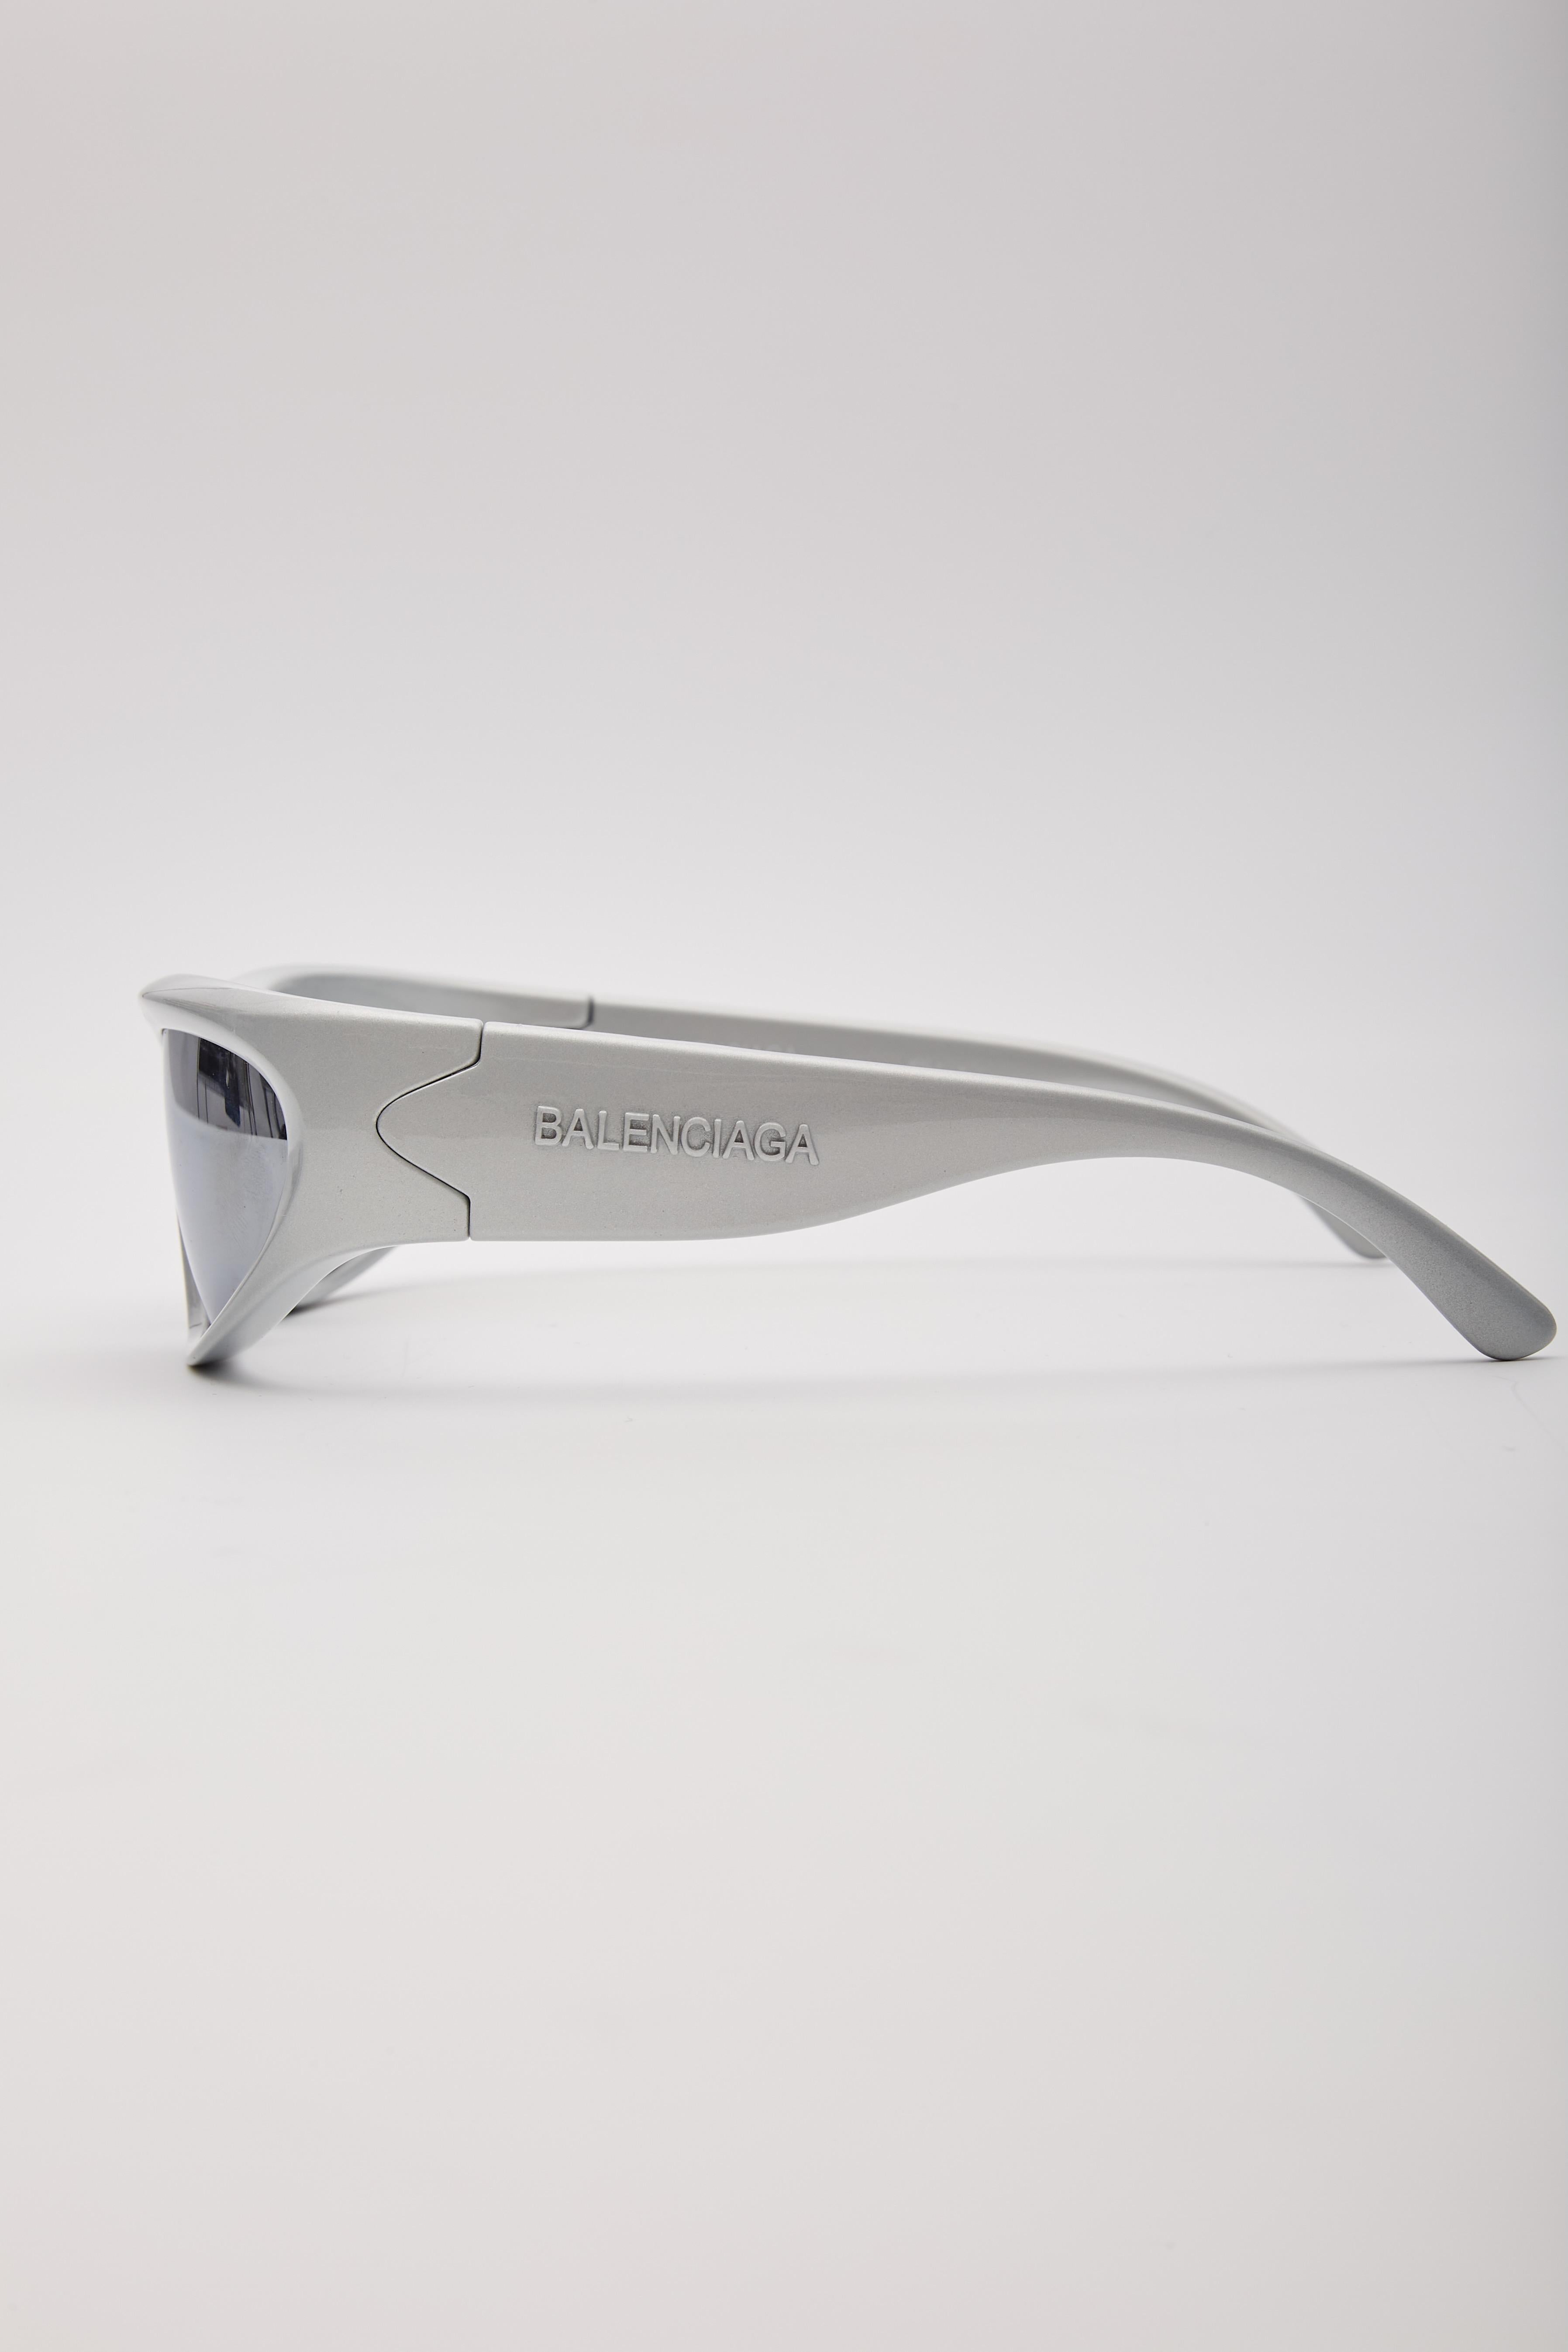 Balenciaga Wraparound-frame Silver Sunglasses In Good Condition For Sale In Montreal, Quebec